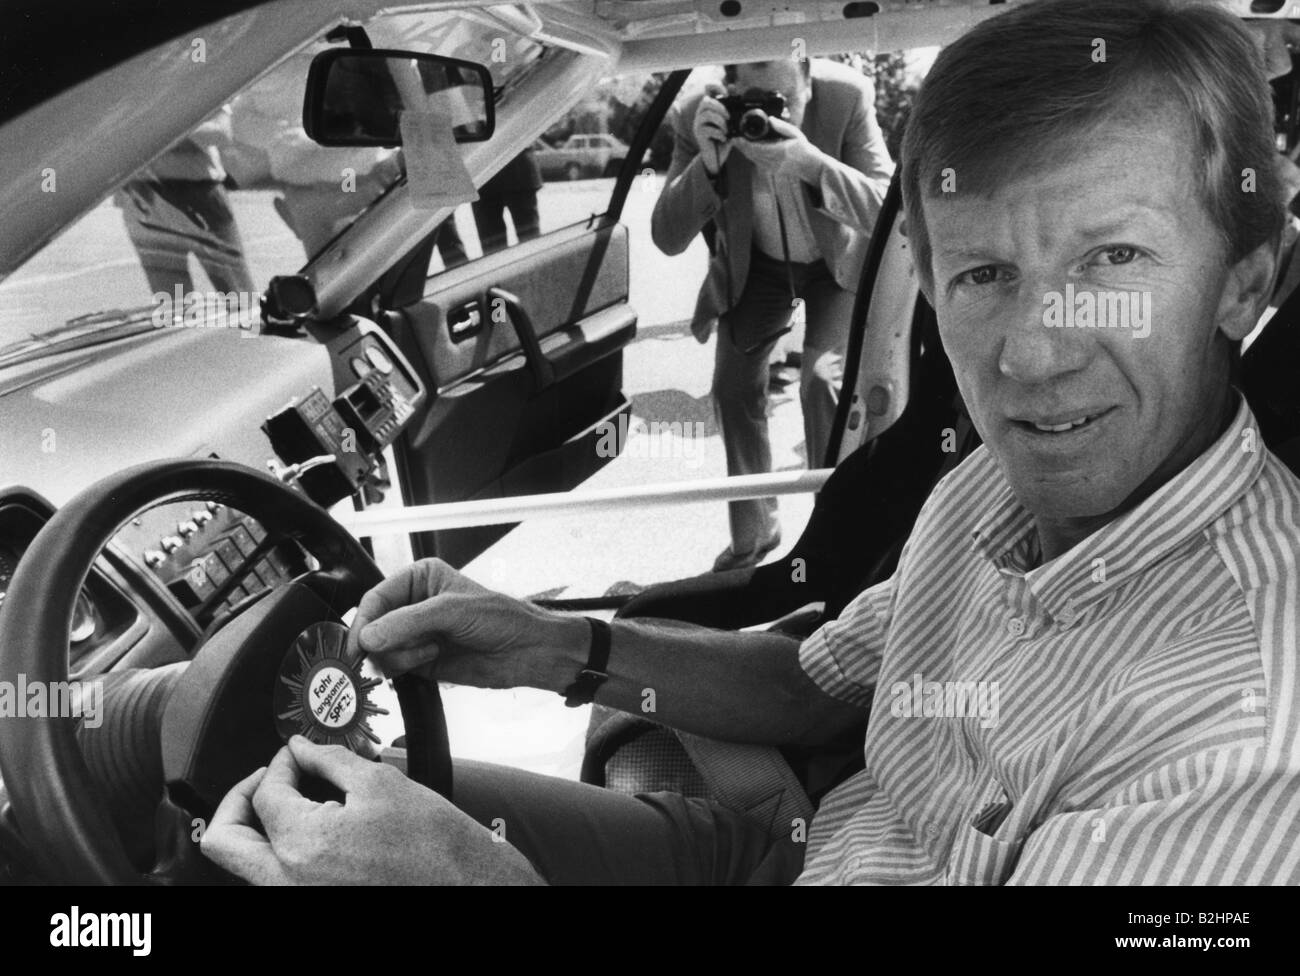 Röhrl, Walter, * 7.3.1947, German athlete (race driver), sitting in car, 1988, Stock Photo